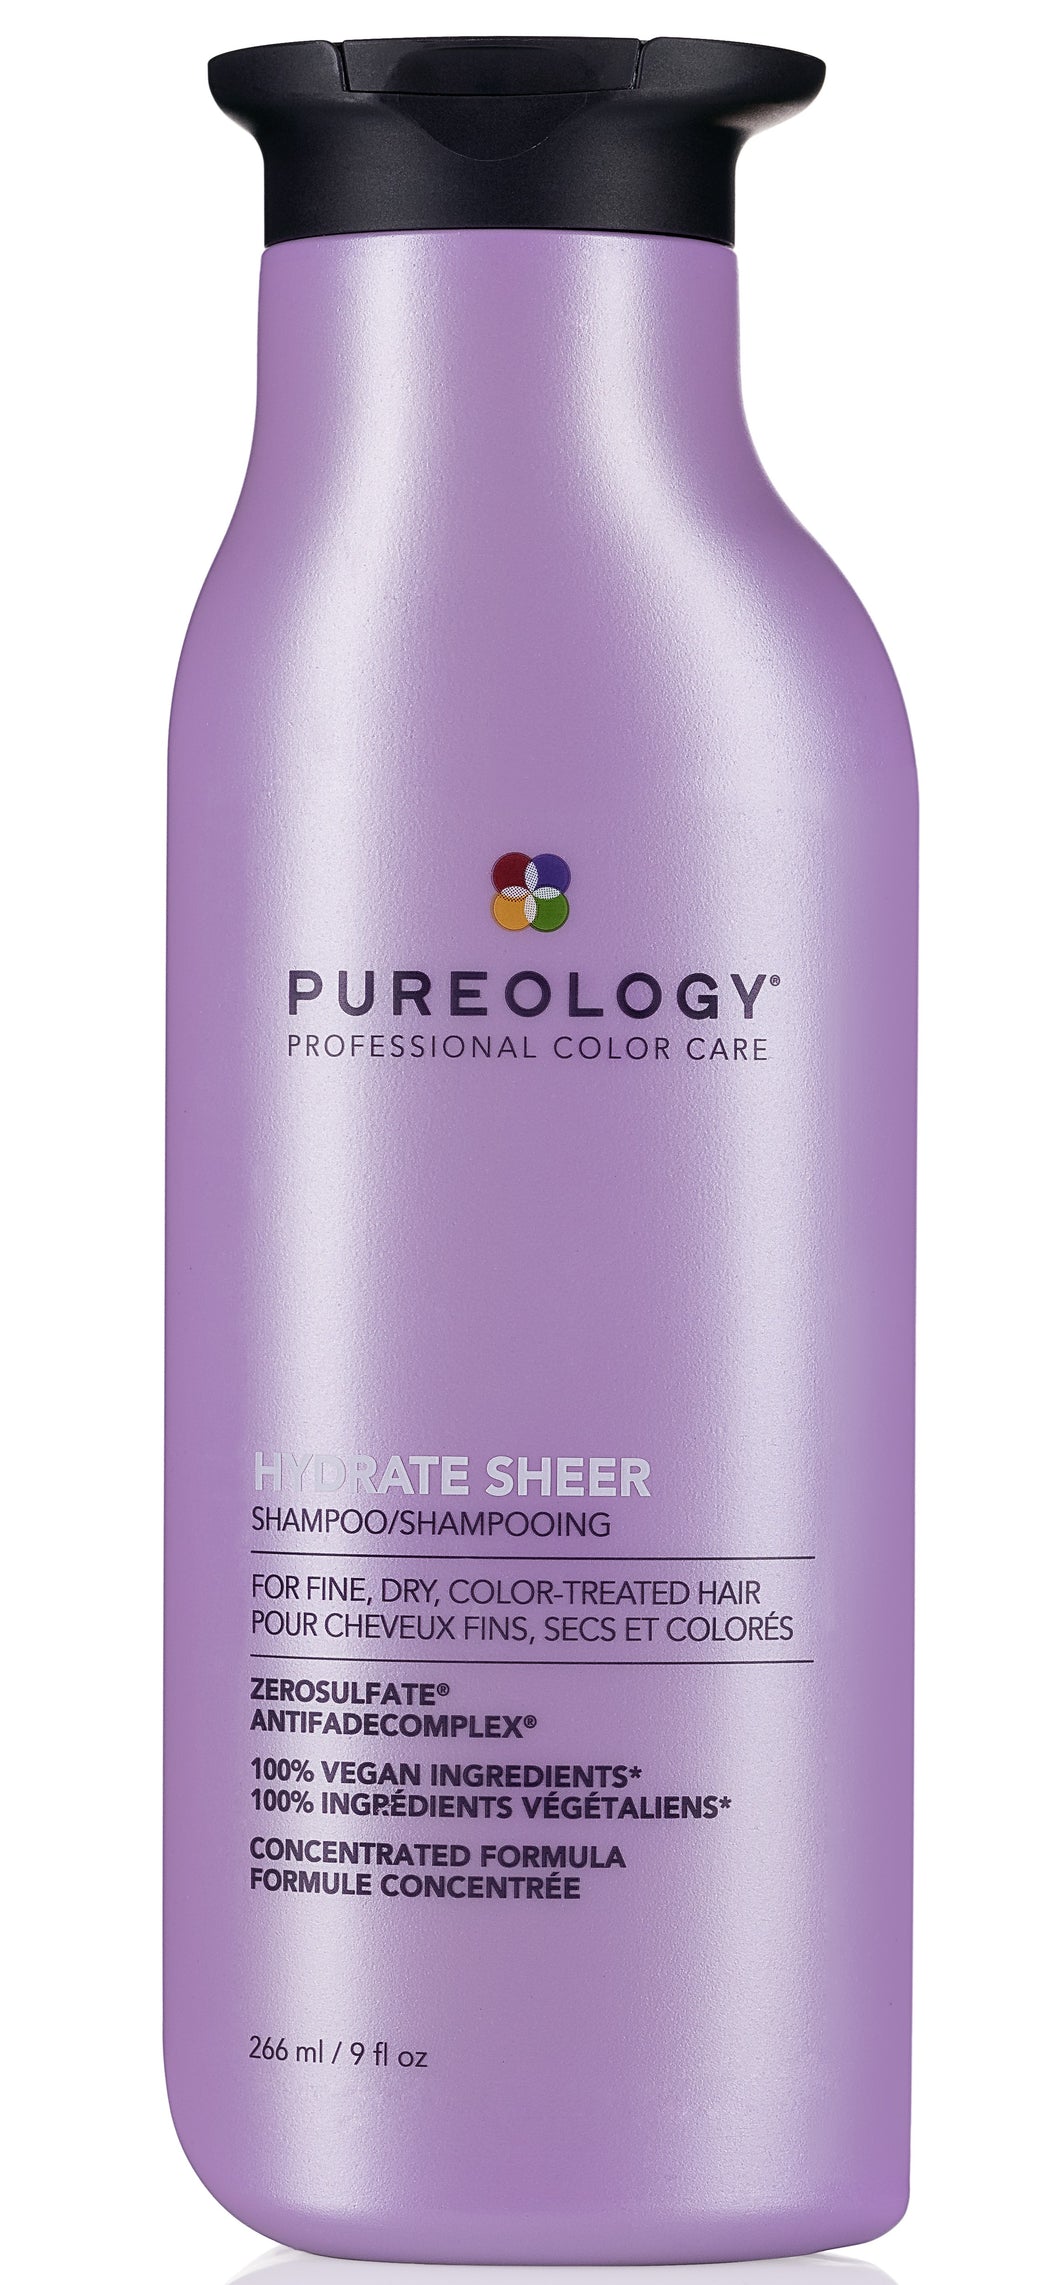 Pureology Hydrate Sheer Shampoo 250ml